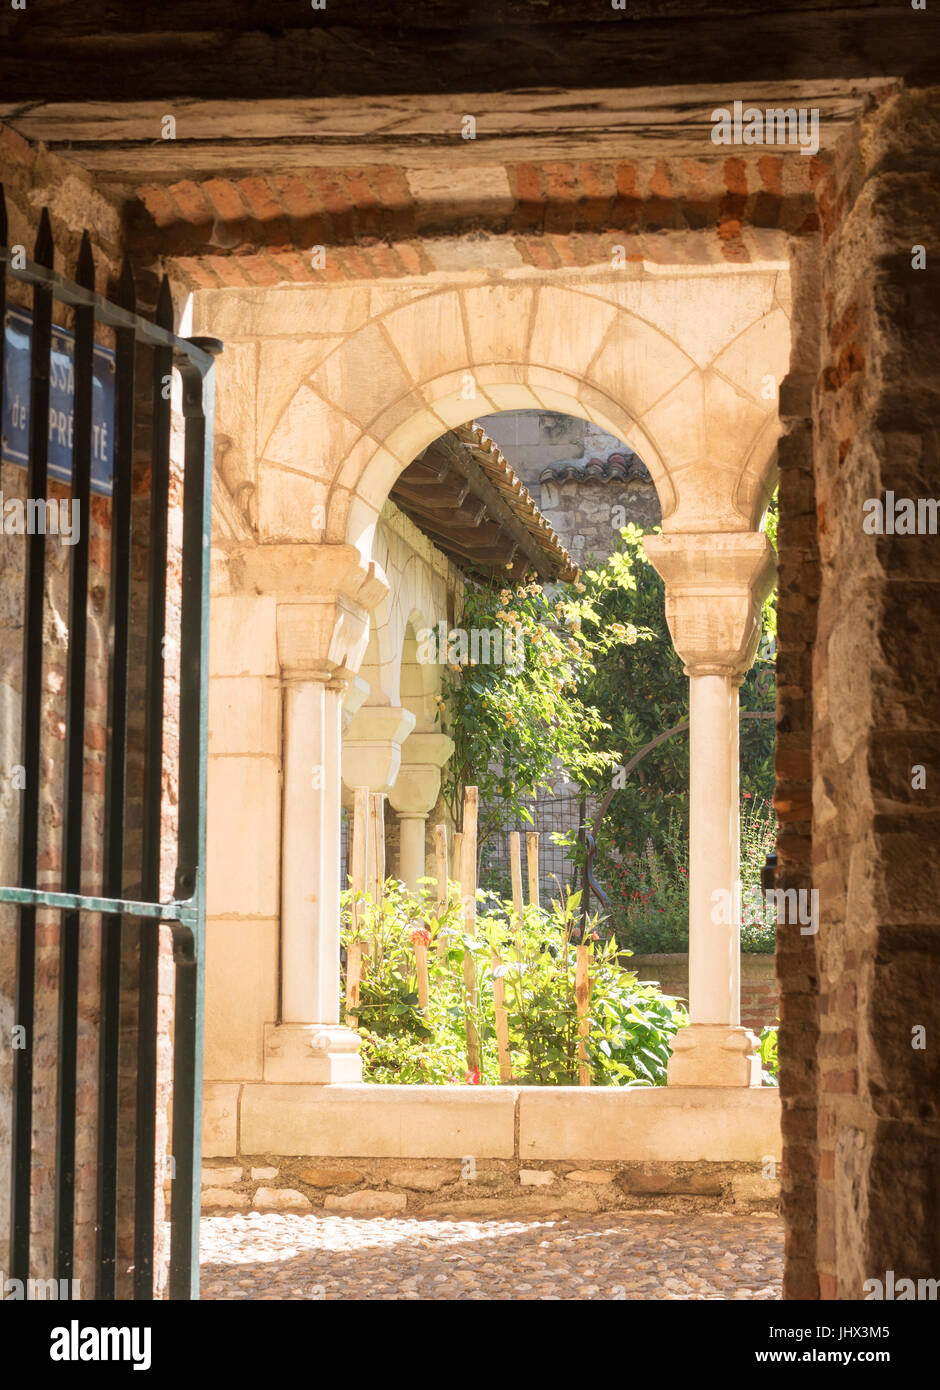 Entrance to the Cloister of Saint Salvi, Albi, France Stock Photo